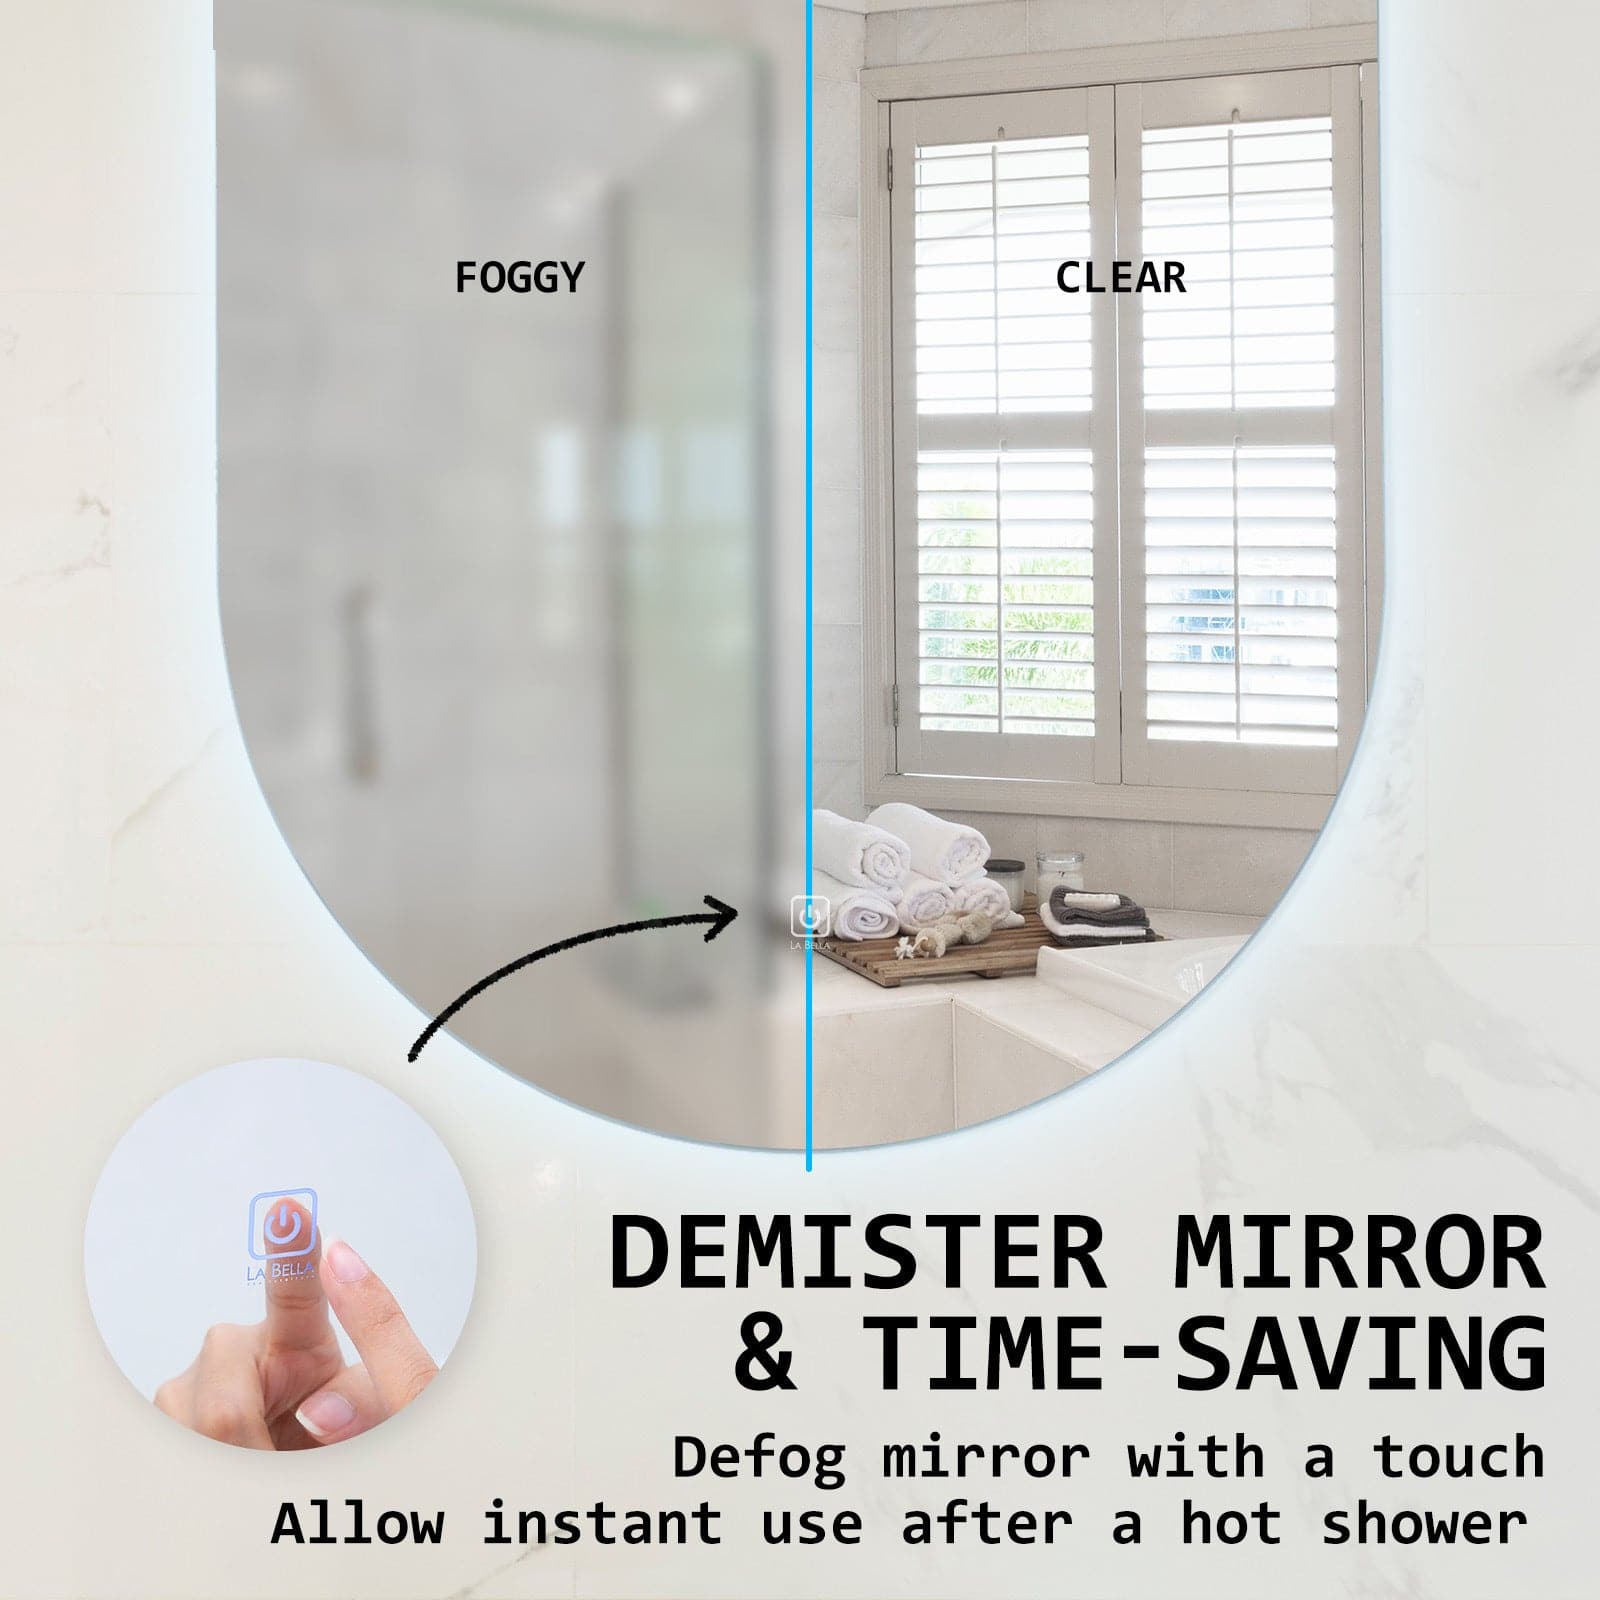 La Bella LED Wall Mirror Oval Touch Anti-Fog Makeup Decor Bathroom Vanity 50 x 75cm-Health &amp; Beauty &gt; Makeup Mirrors-PEROZ Accessories